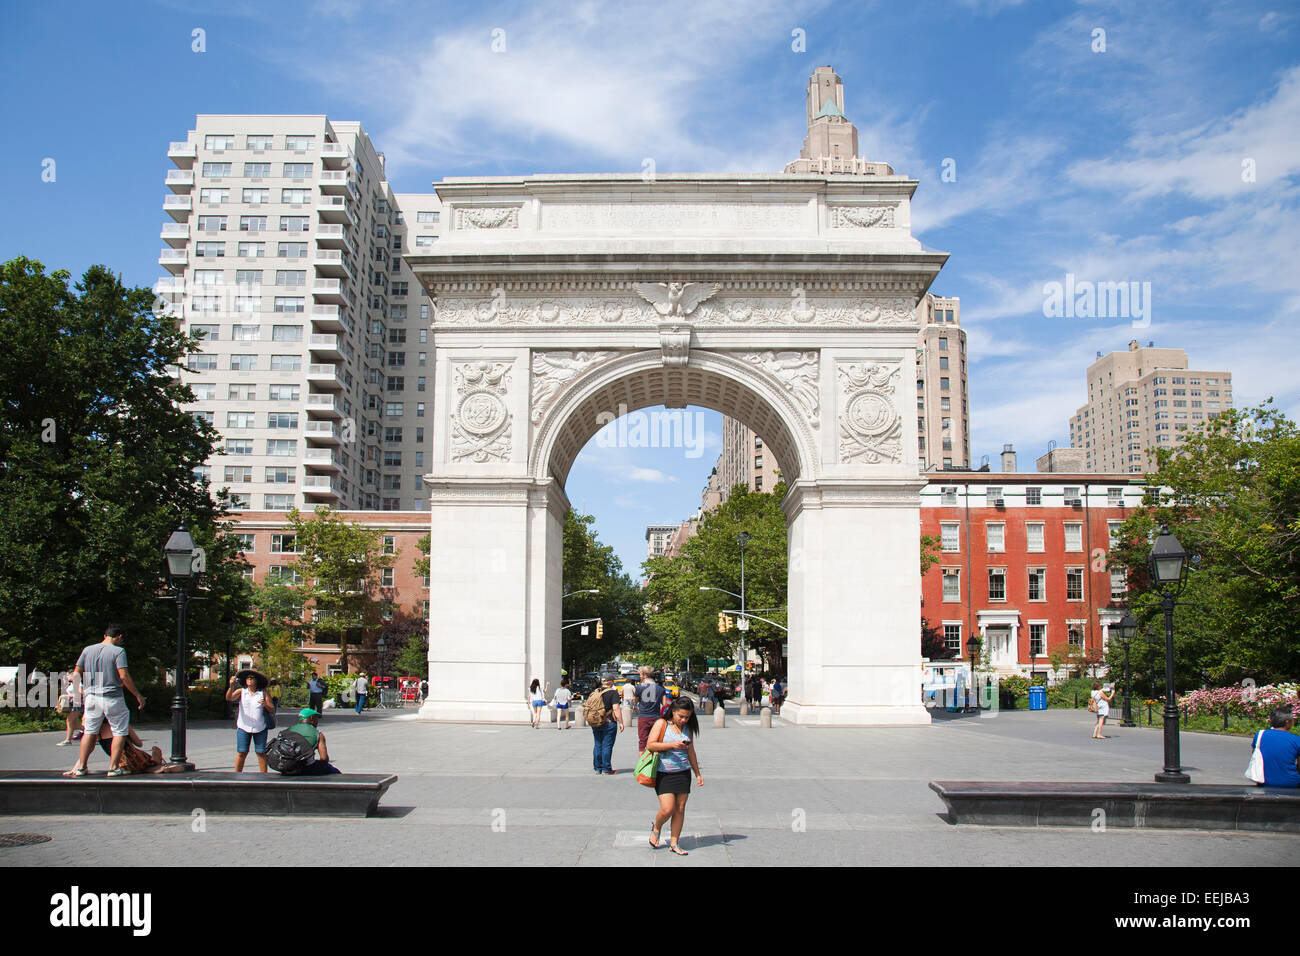 Stanford White arch, Washington Square Park, Greenwich Village, New York, USA, Amérique Latine Banque D'Images